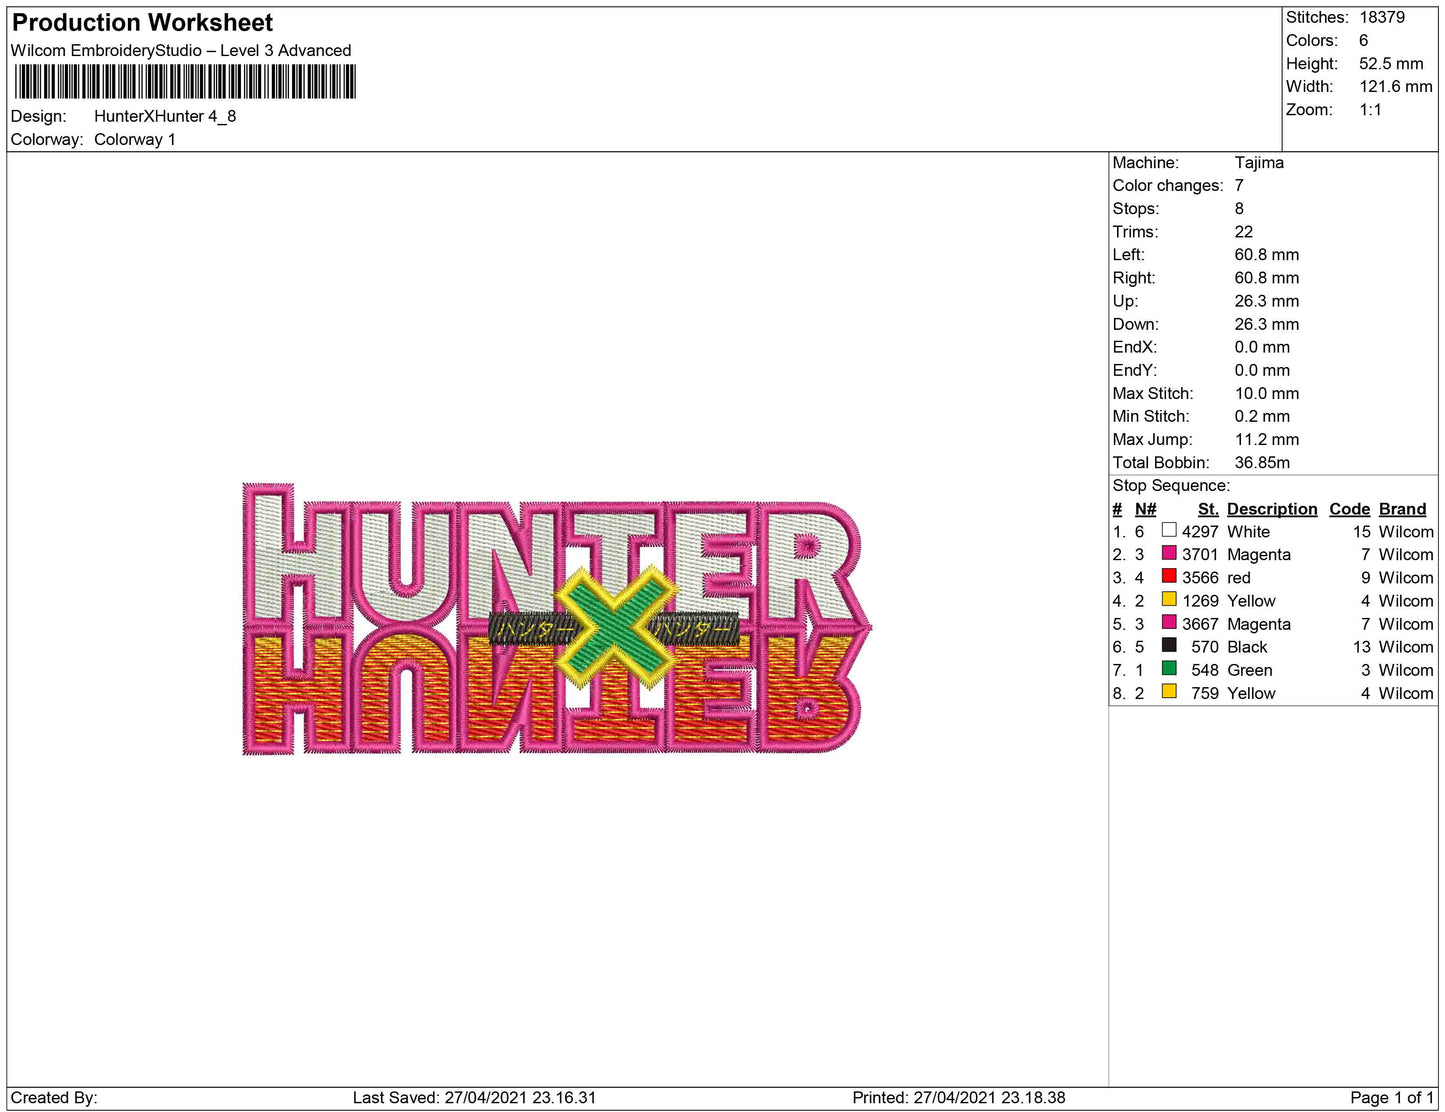 Hunter x Hunter Production